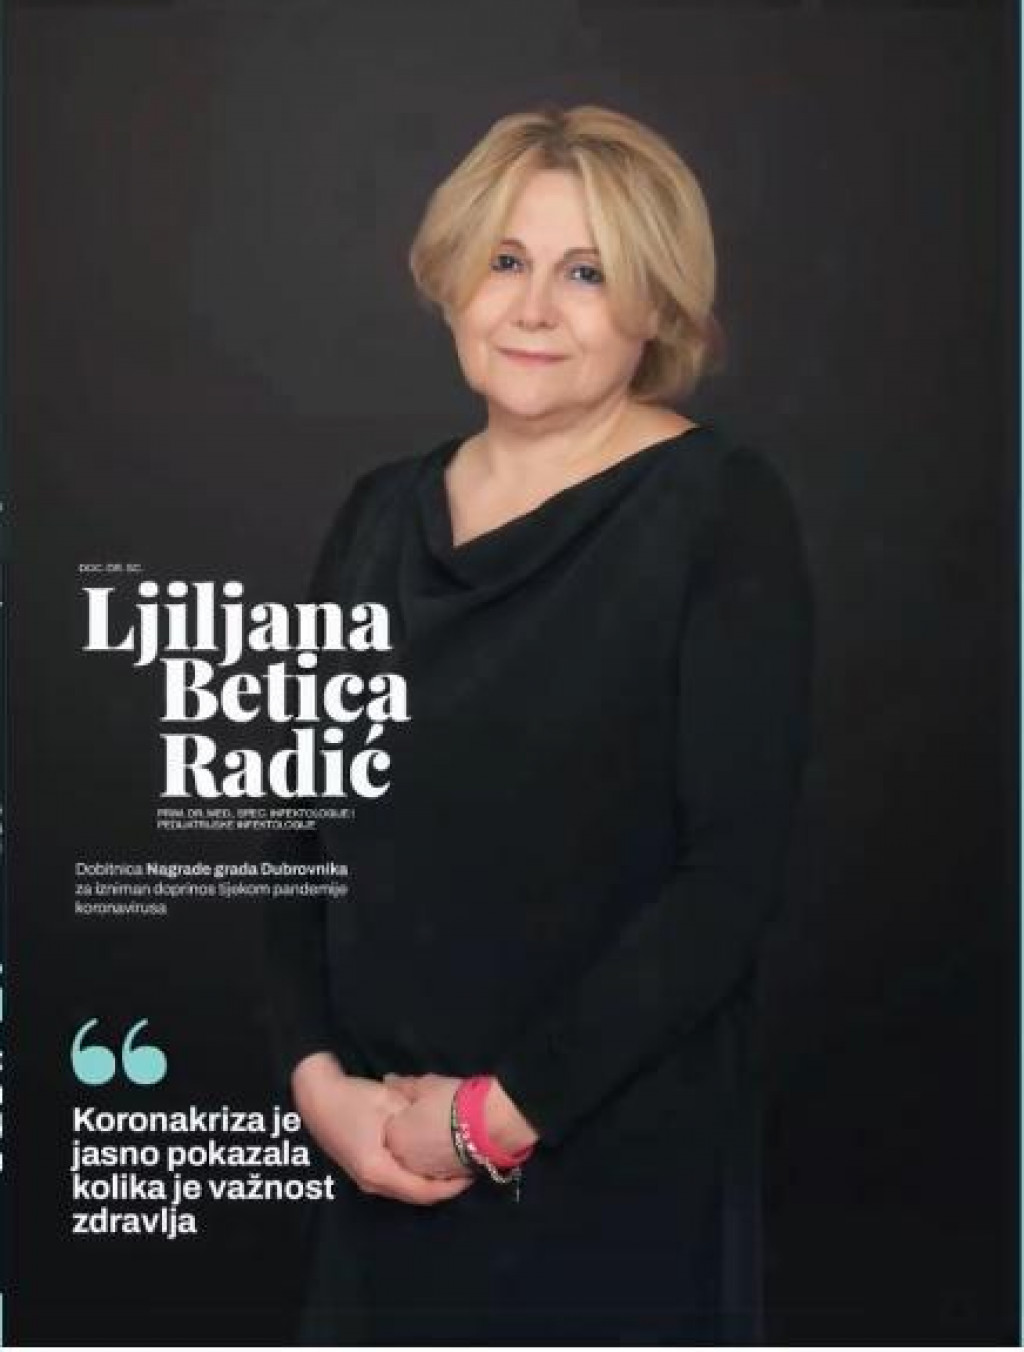 &lt;p&gt;Dr Ljiljana Betica Radić u biranom je društvu&lt;/p&gt;